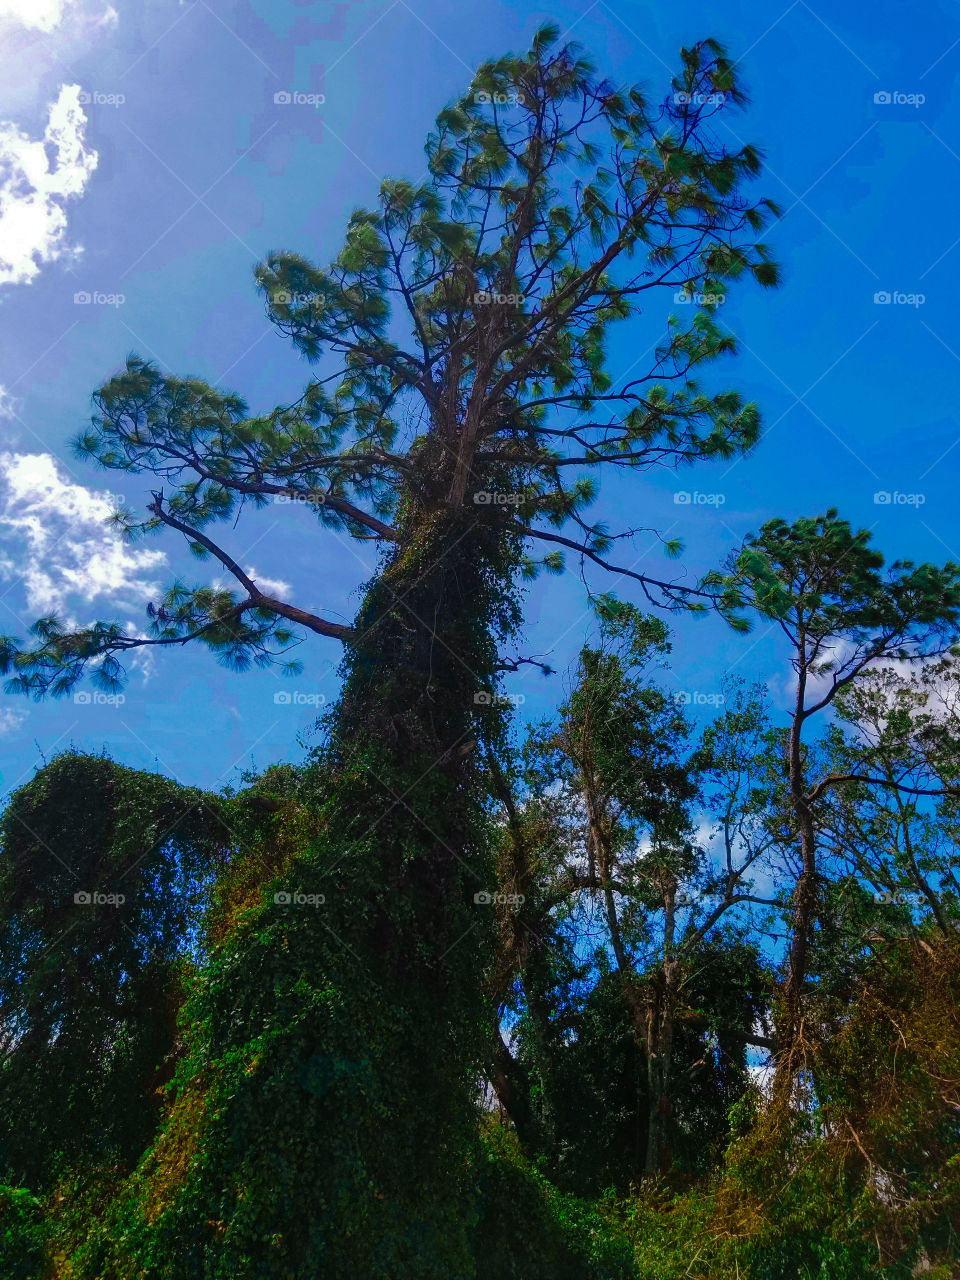 Tall Tree in Florida